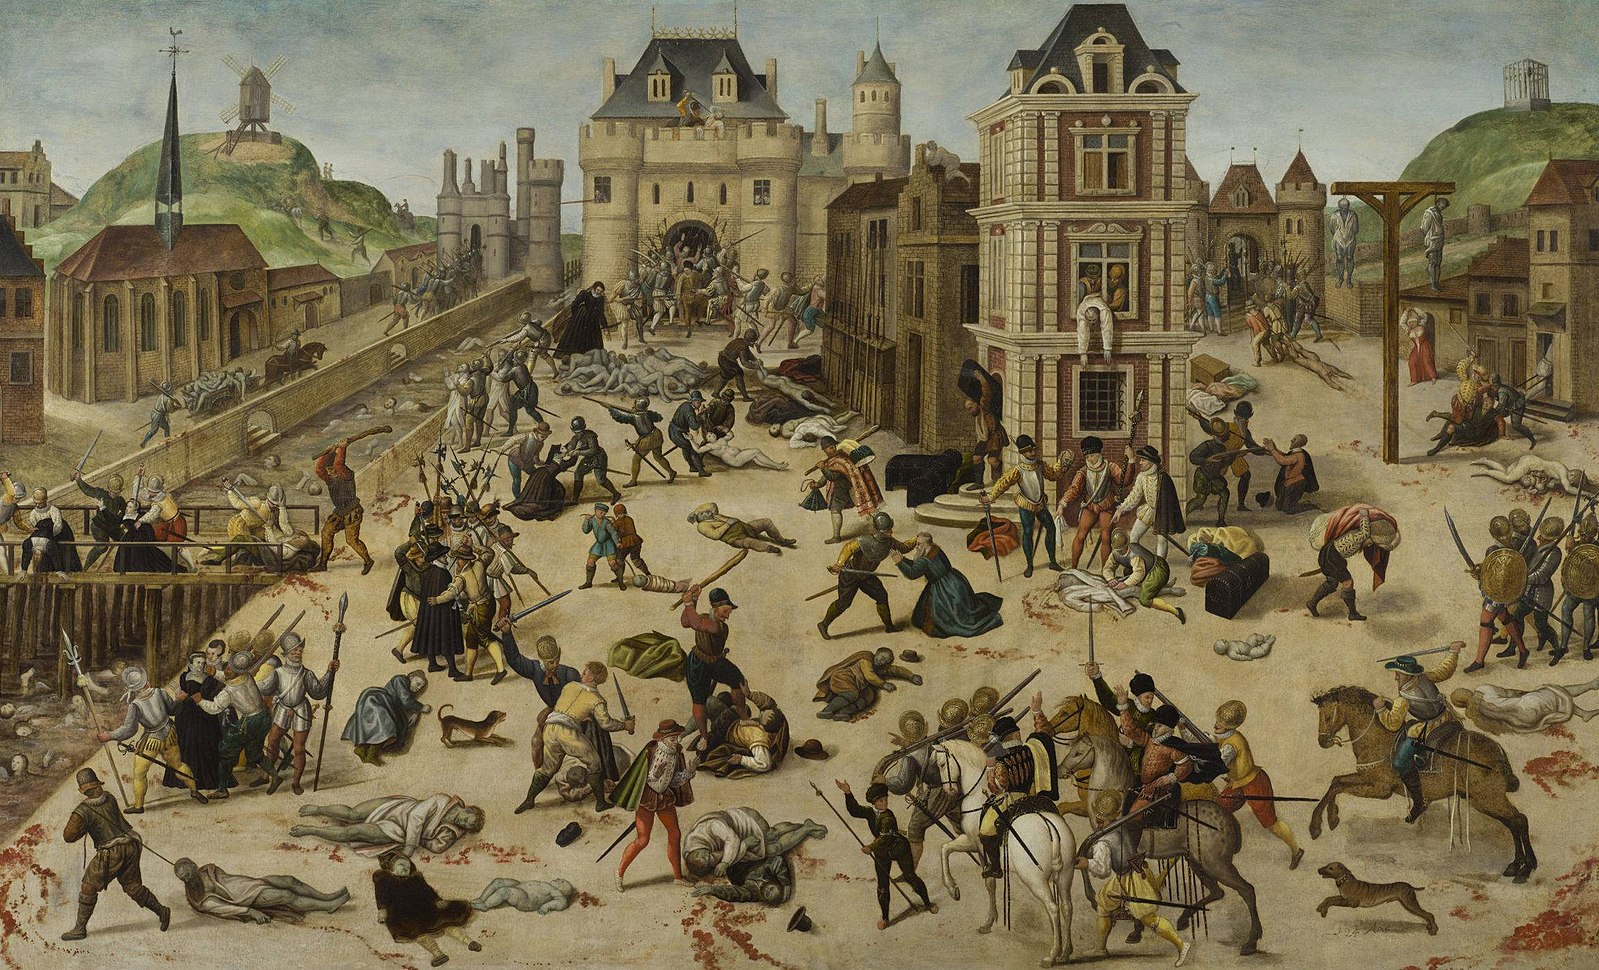 St. Bartholomew's Day massacre (1572), by François Dubois. Wikipedia Commons https://en.wikipedia.org/wiki/File:La_masacre_de_San_Bartolom%C3%A9,_por_Fran%C3%A7ois_Dubois.jpg